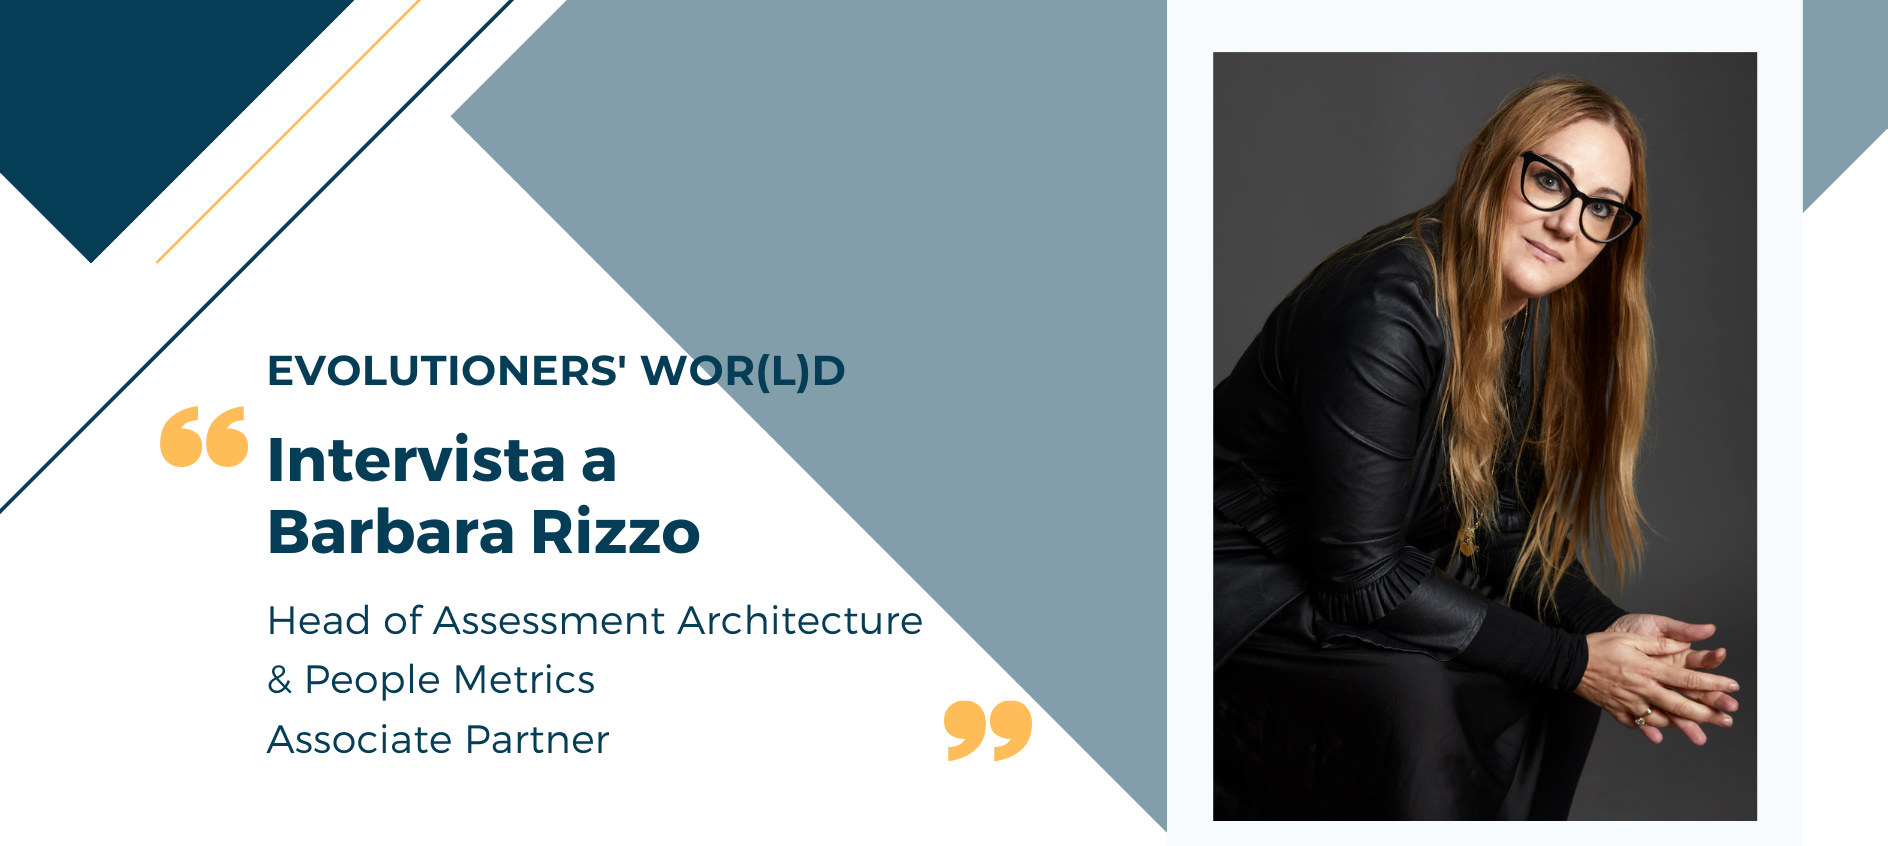 Evolutioners' world Barbara Rizzo Head of Assessment Architecture & People Metrics